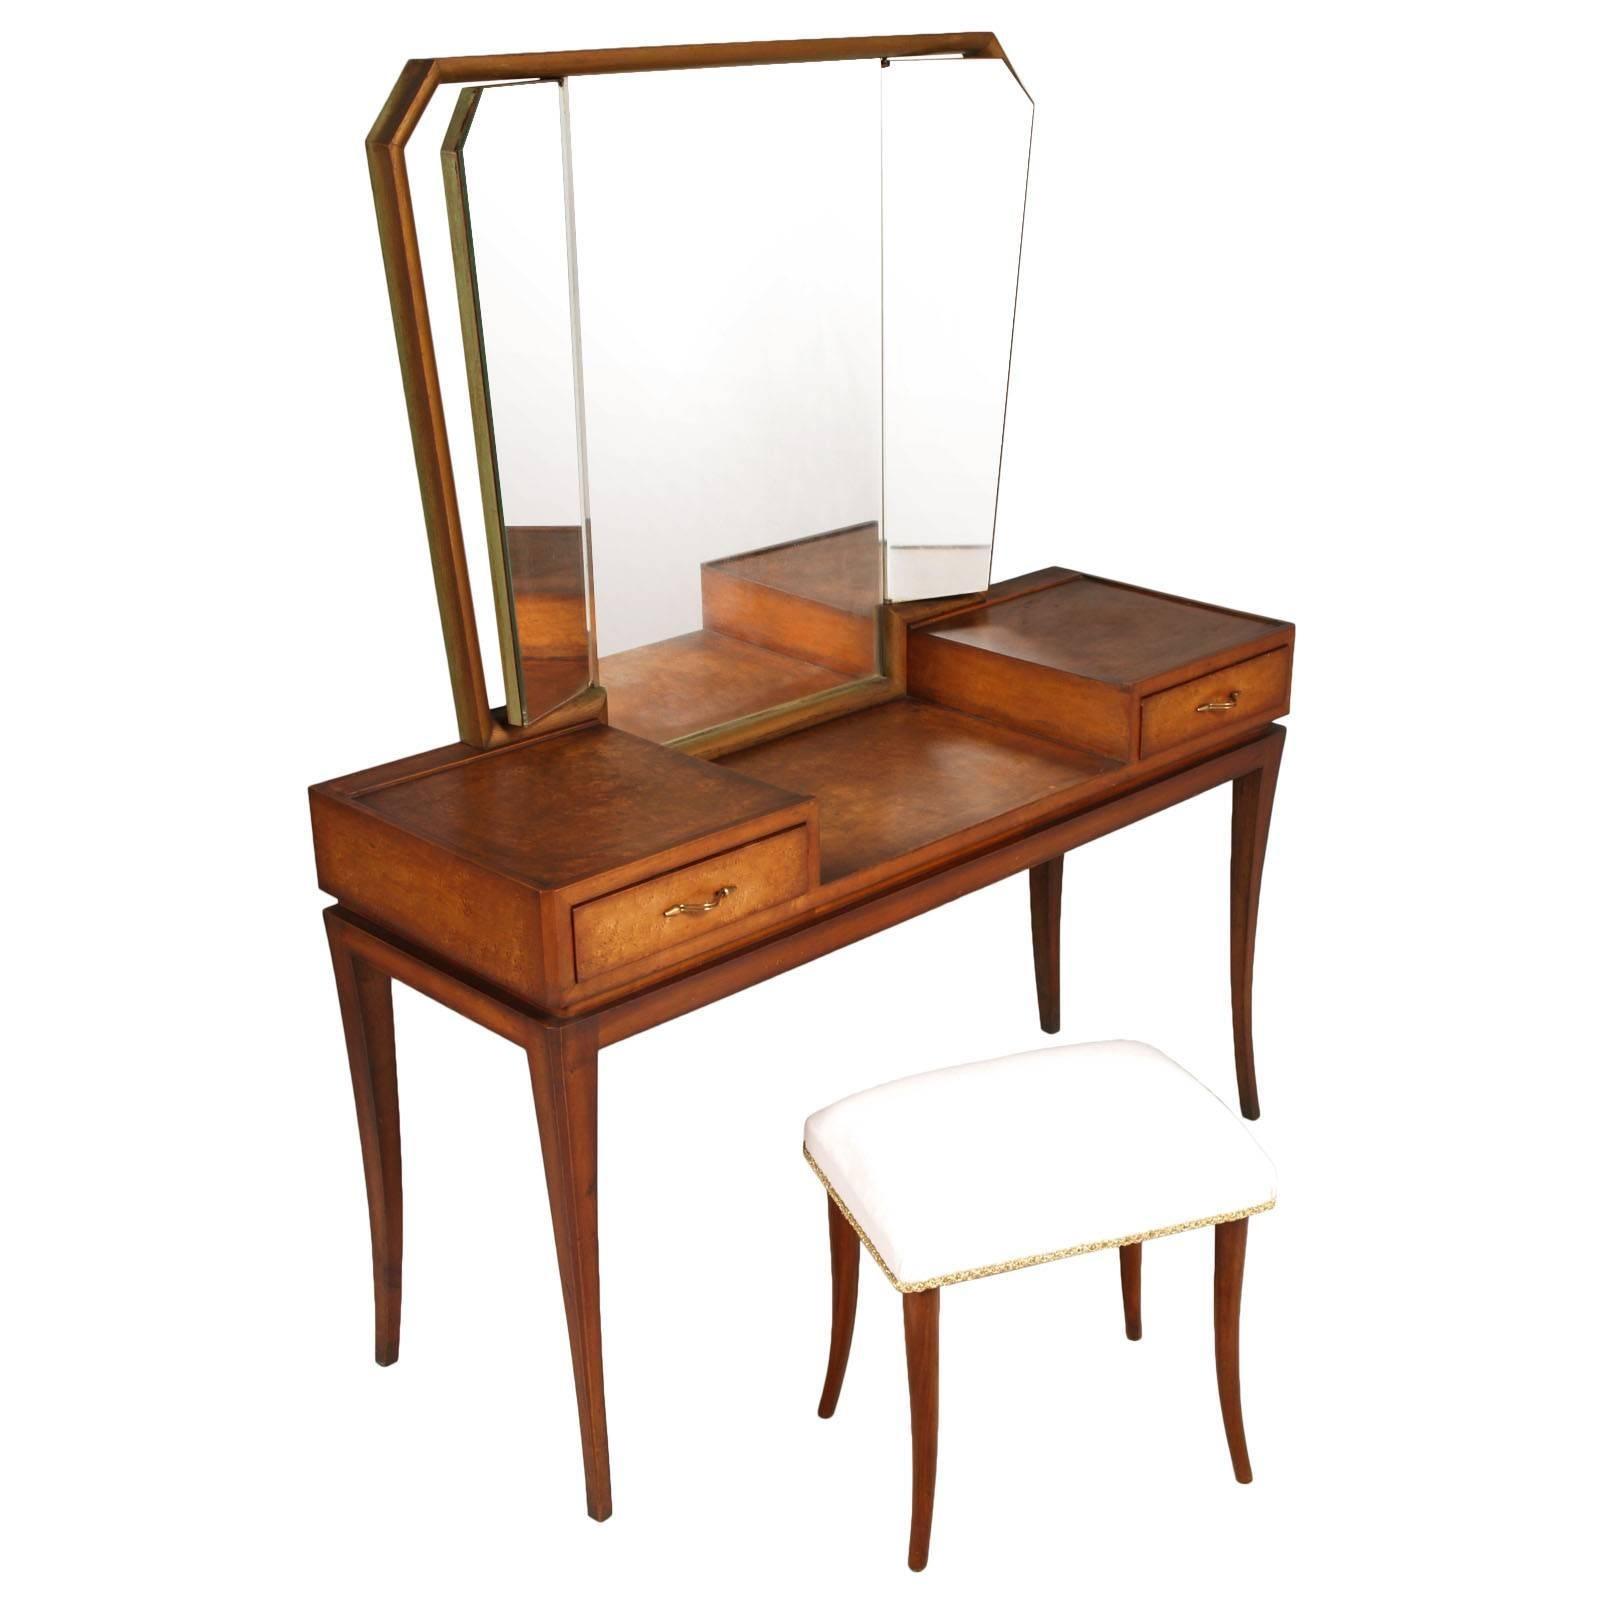 Early 20th Century Modernist Vanity or Dressing Table, Meroni & Fossati Lissone